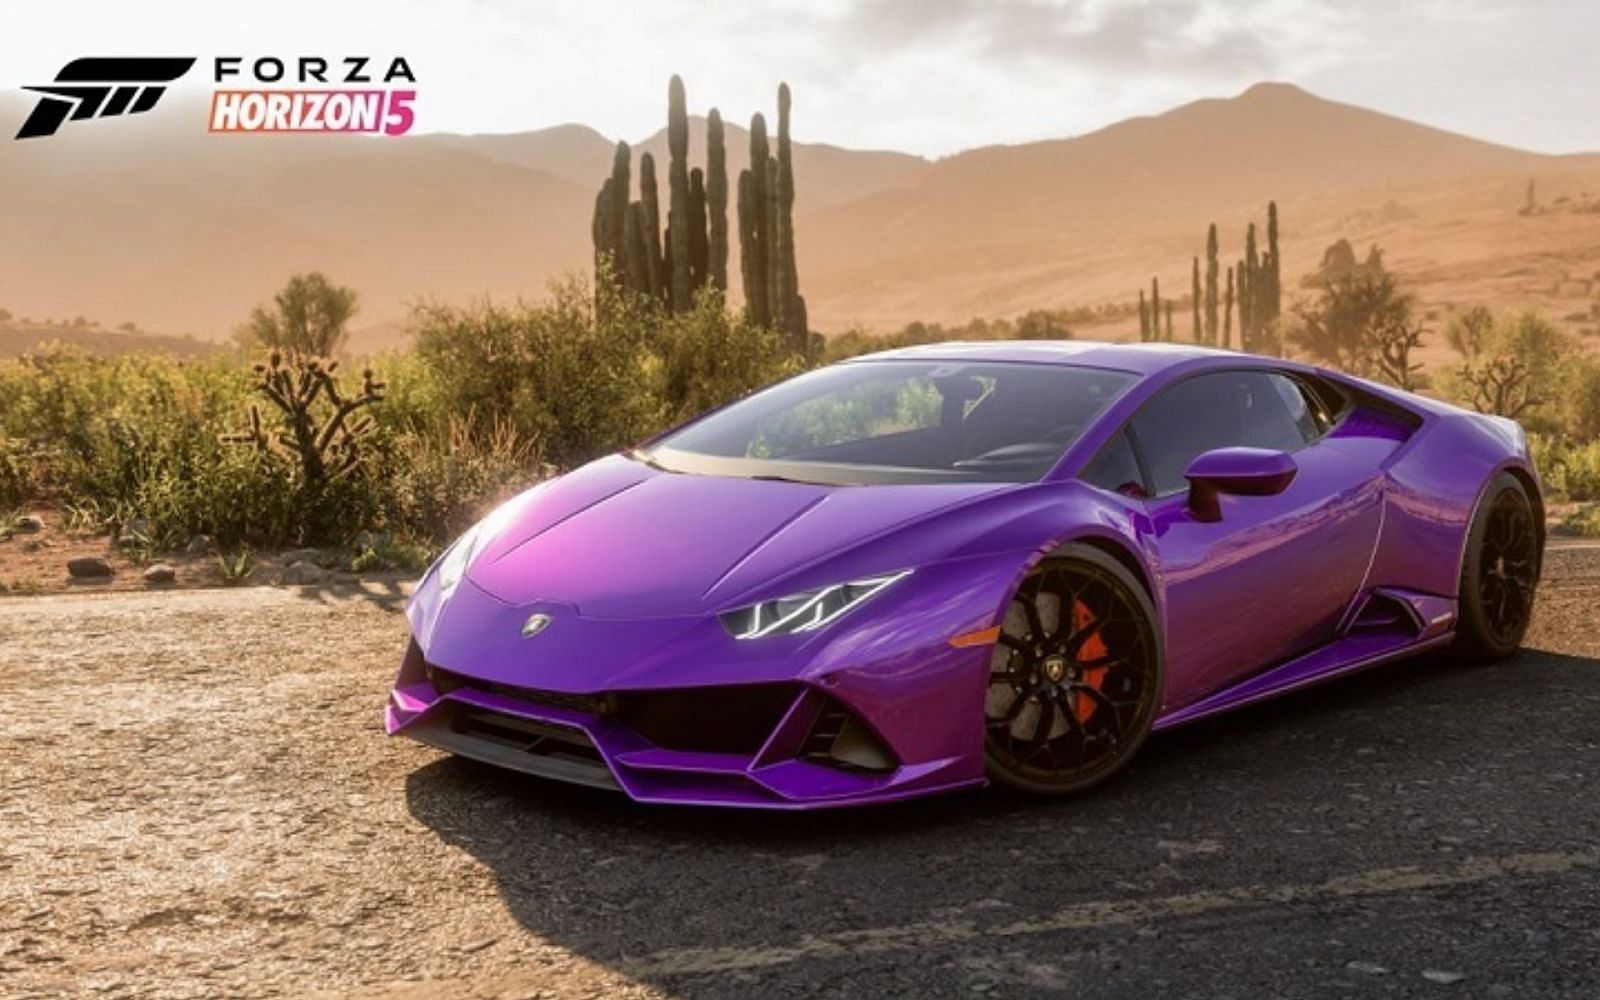 Forza Horizon 5 Series 3 brings new cars (Image by Forza Horizon 5)